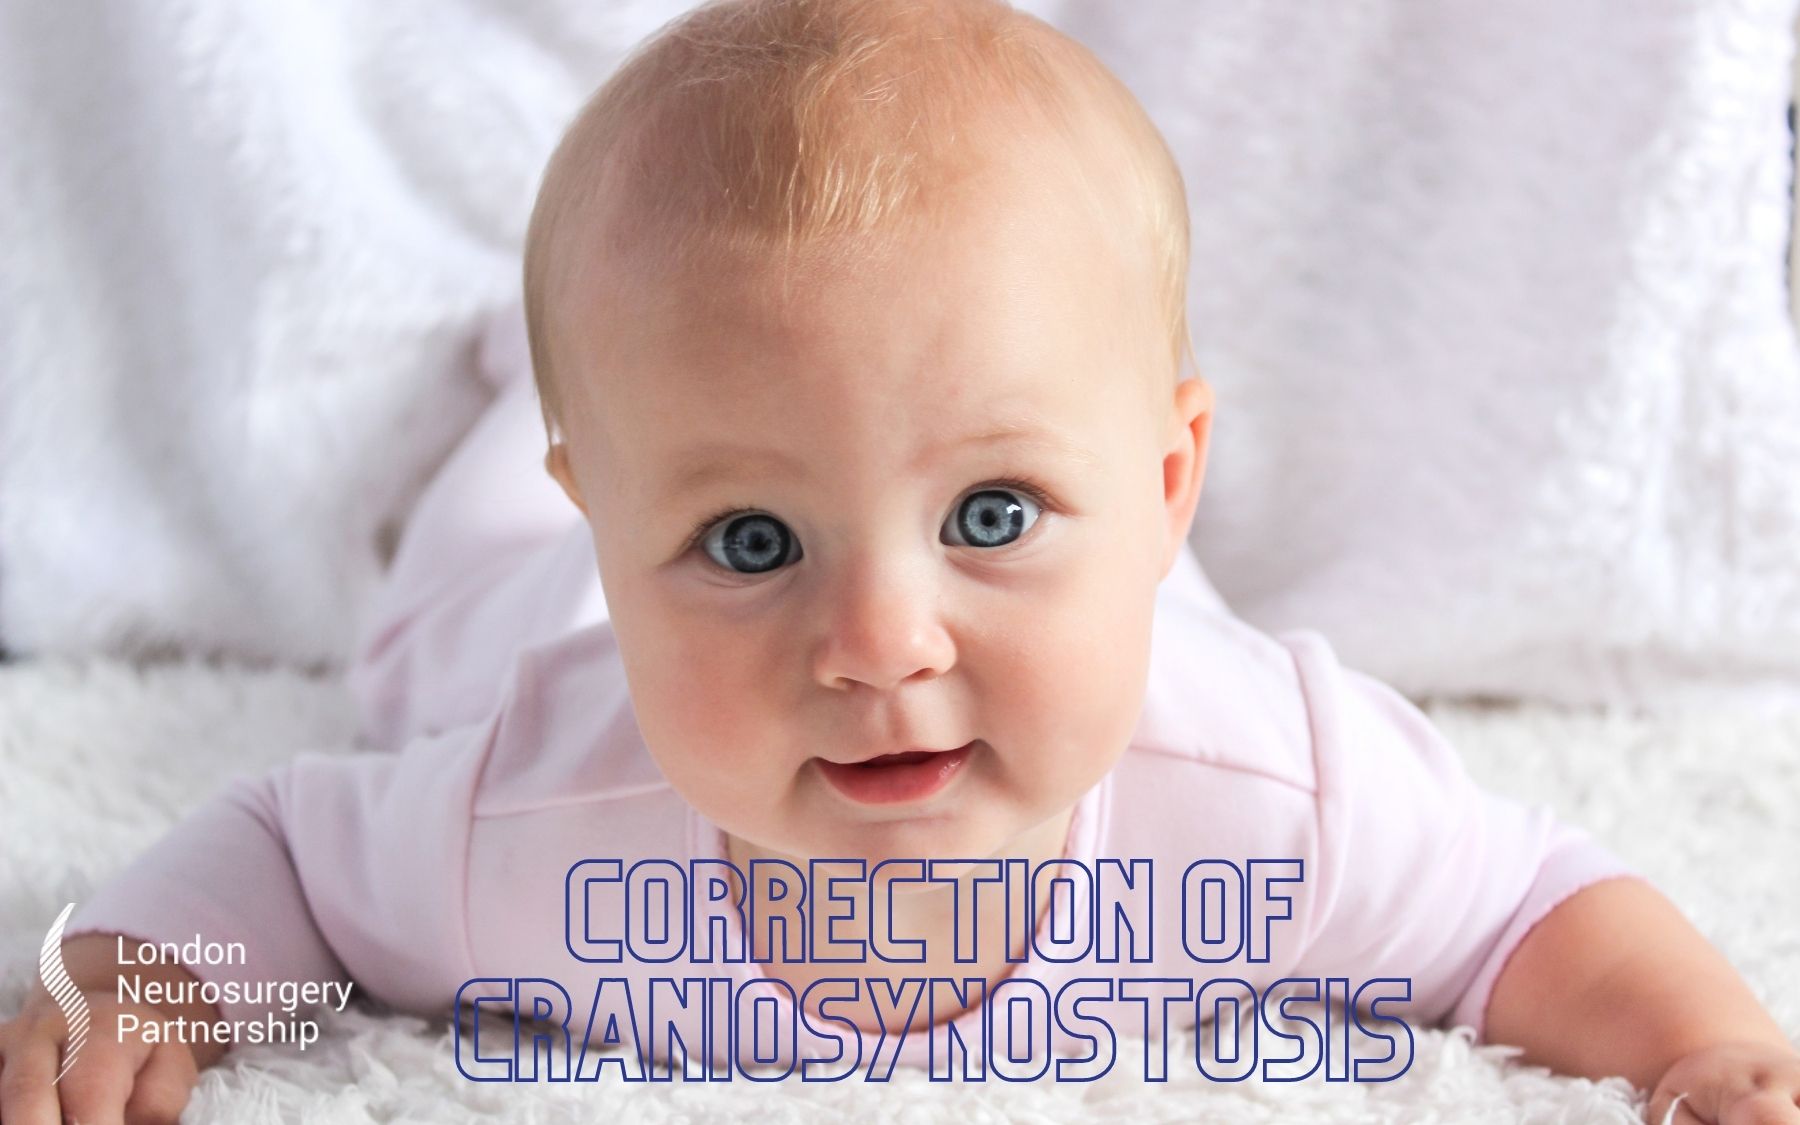 Correction of Craniosynostosis